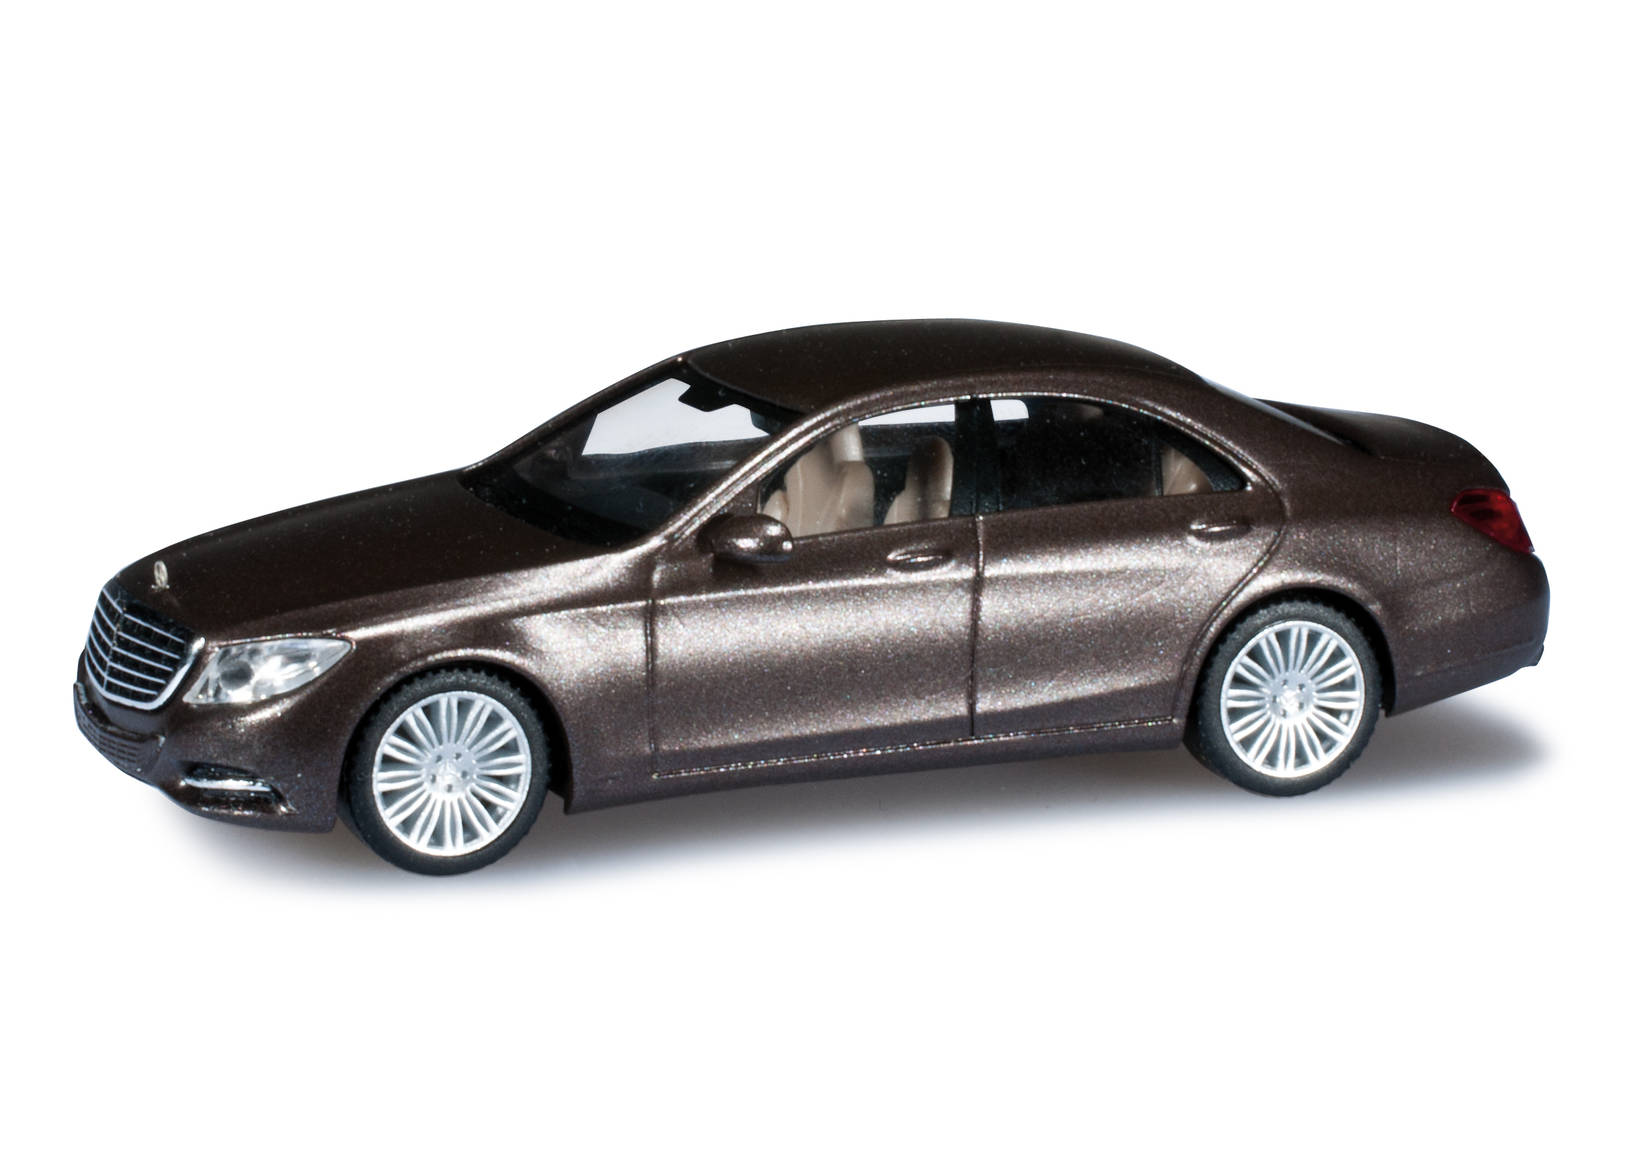 Mercedes-Benz S-class, dolomite brown metallic